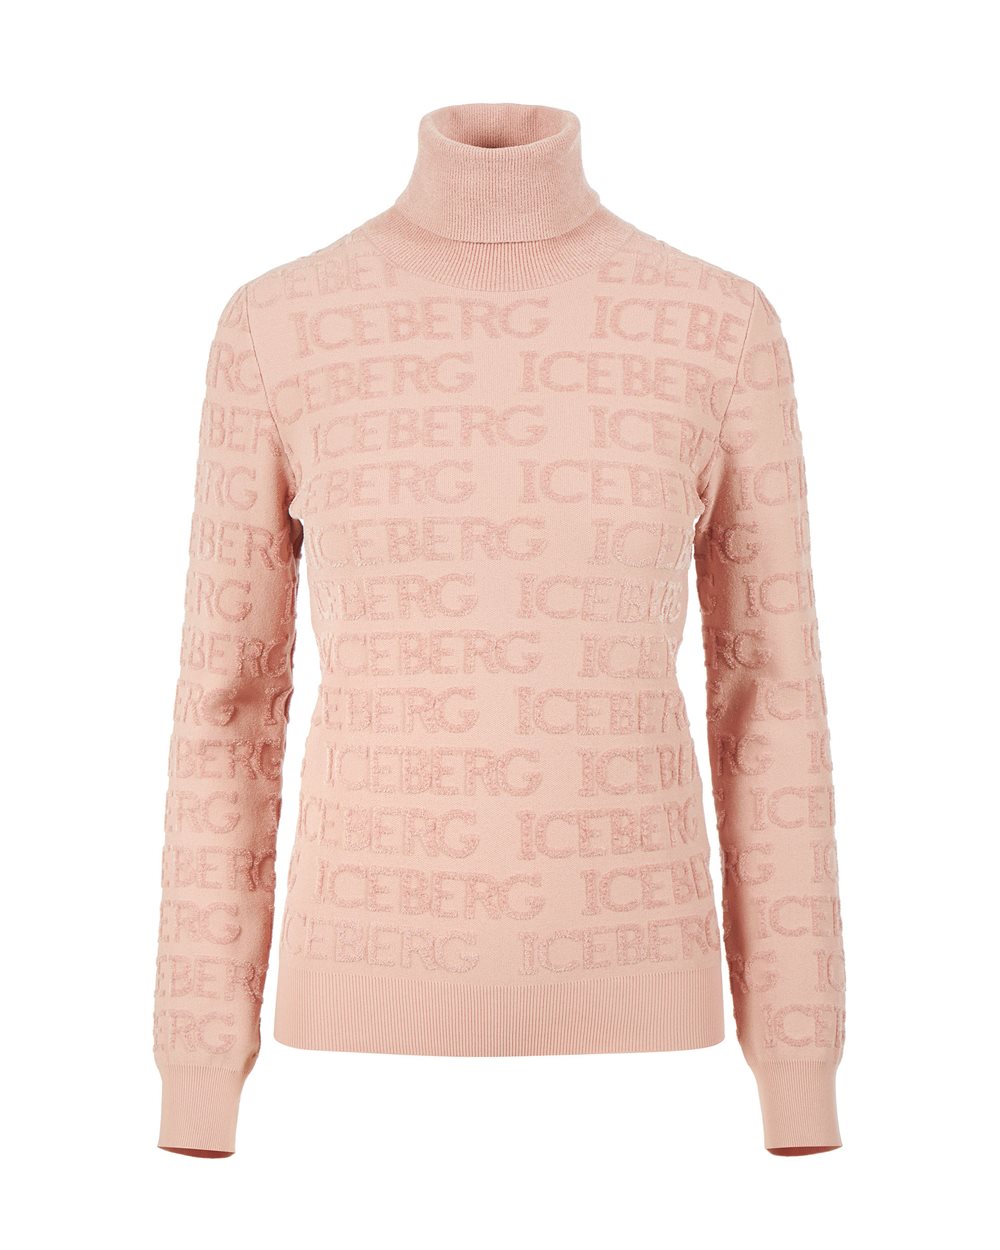 Turtleneck sweater with logo | Iceberg - Official Website